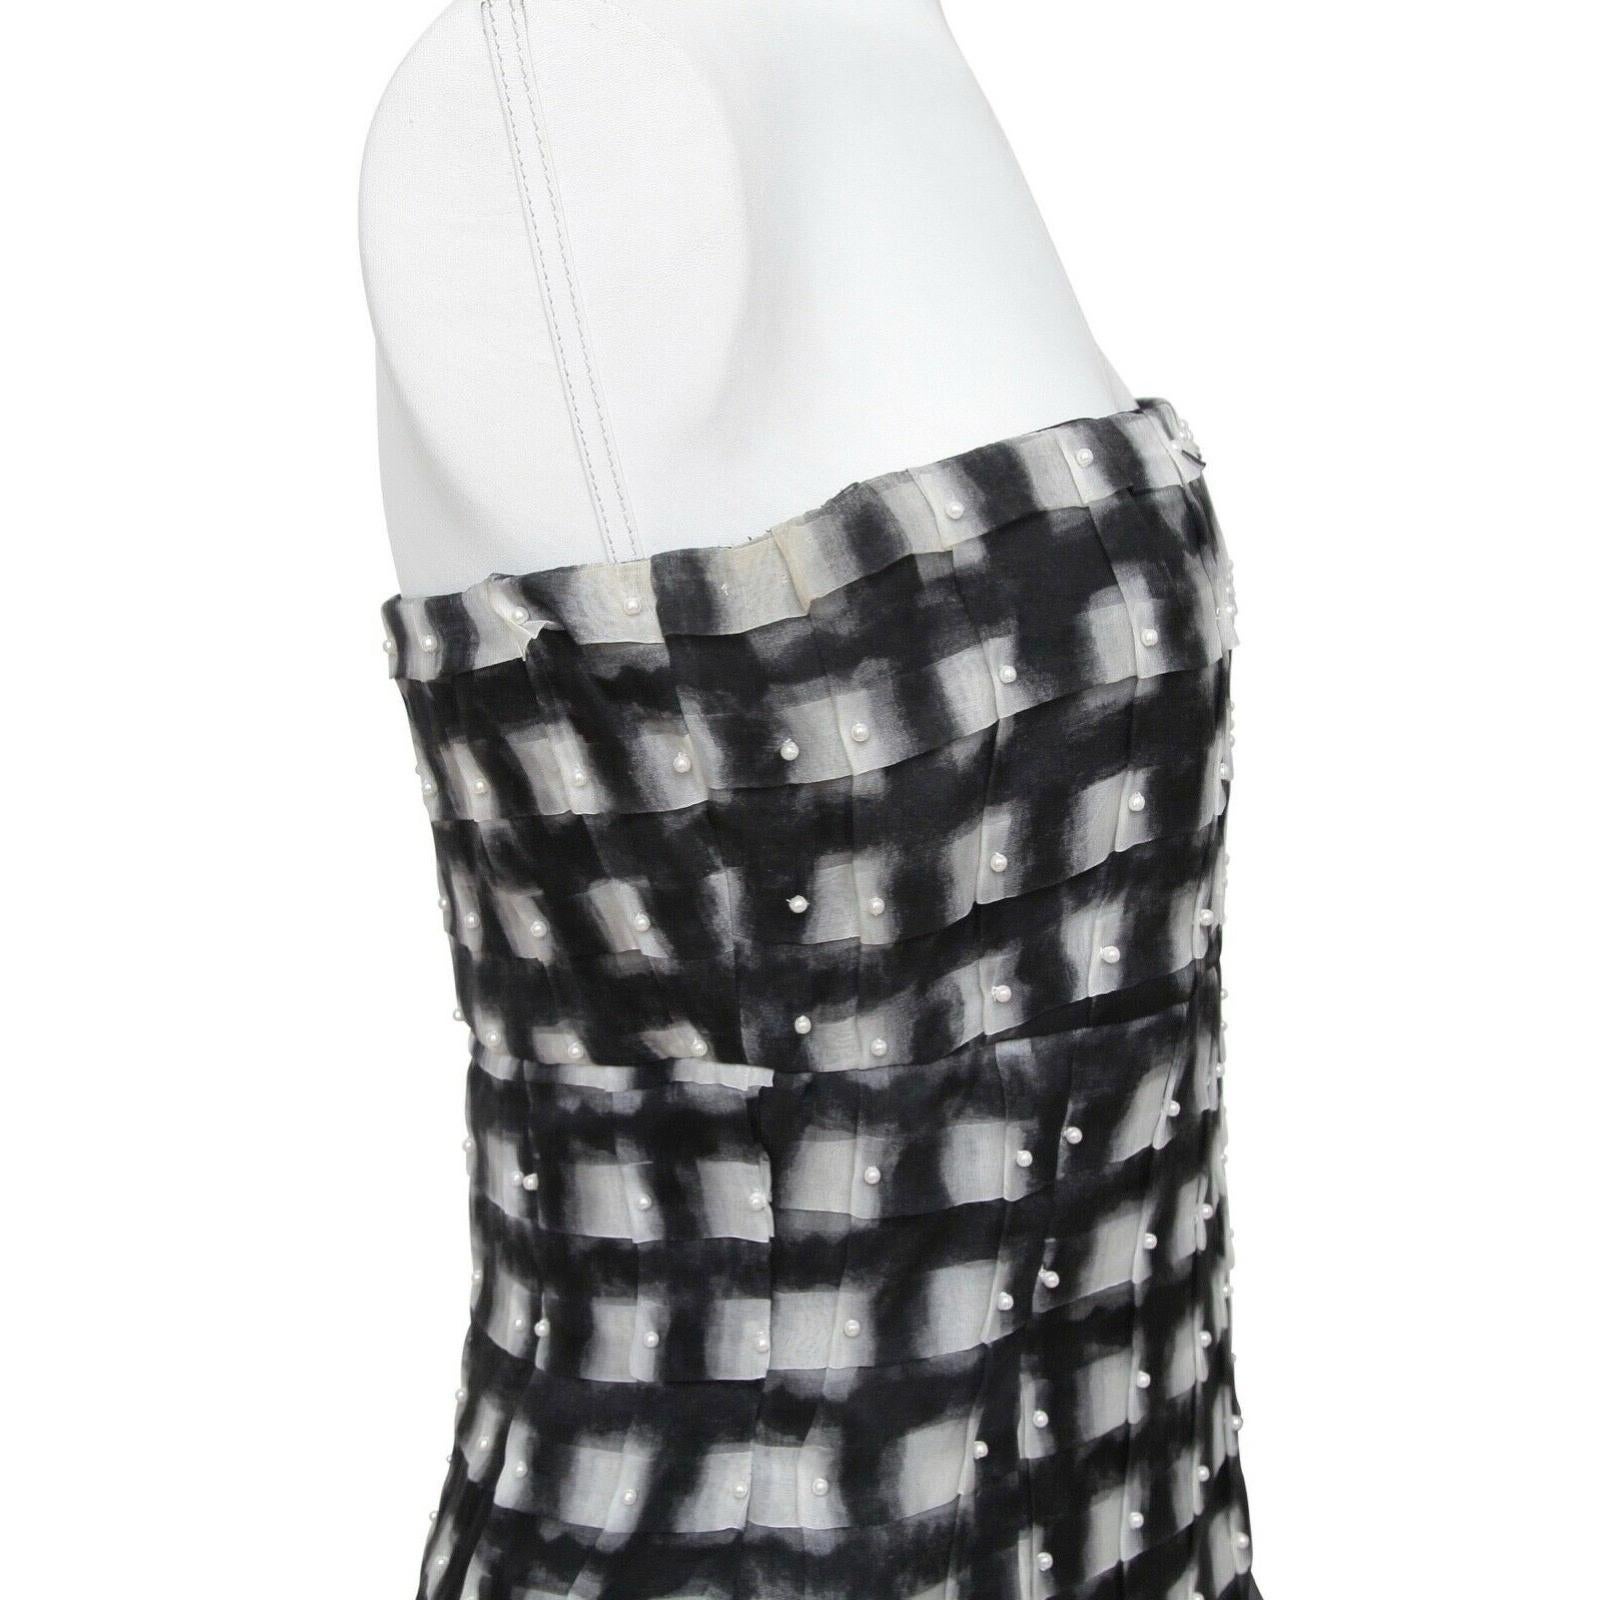 Women's CHANEL Strapless Dress Pearls Black Checkered White RUNWAY 2013 Sz 38